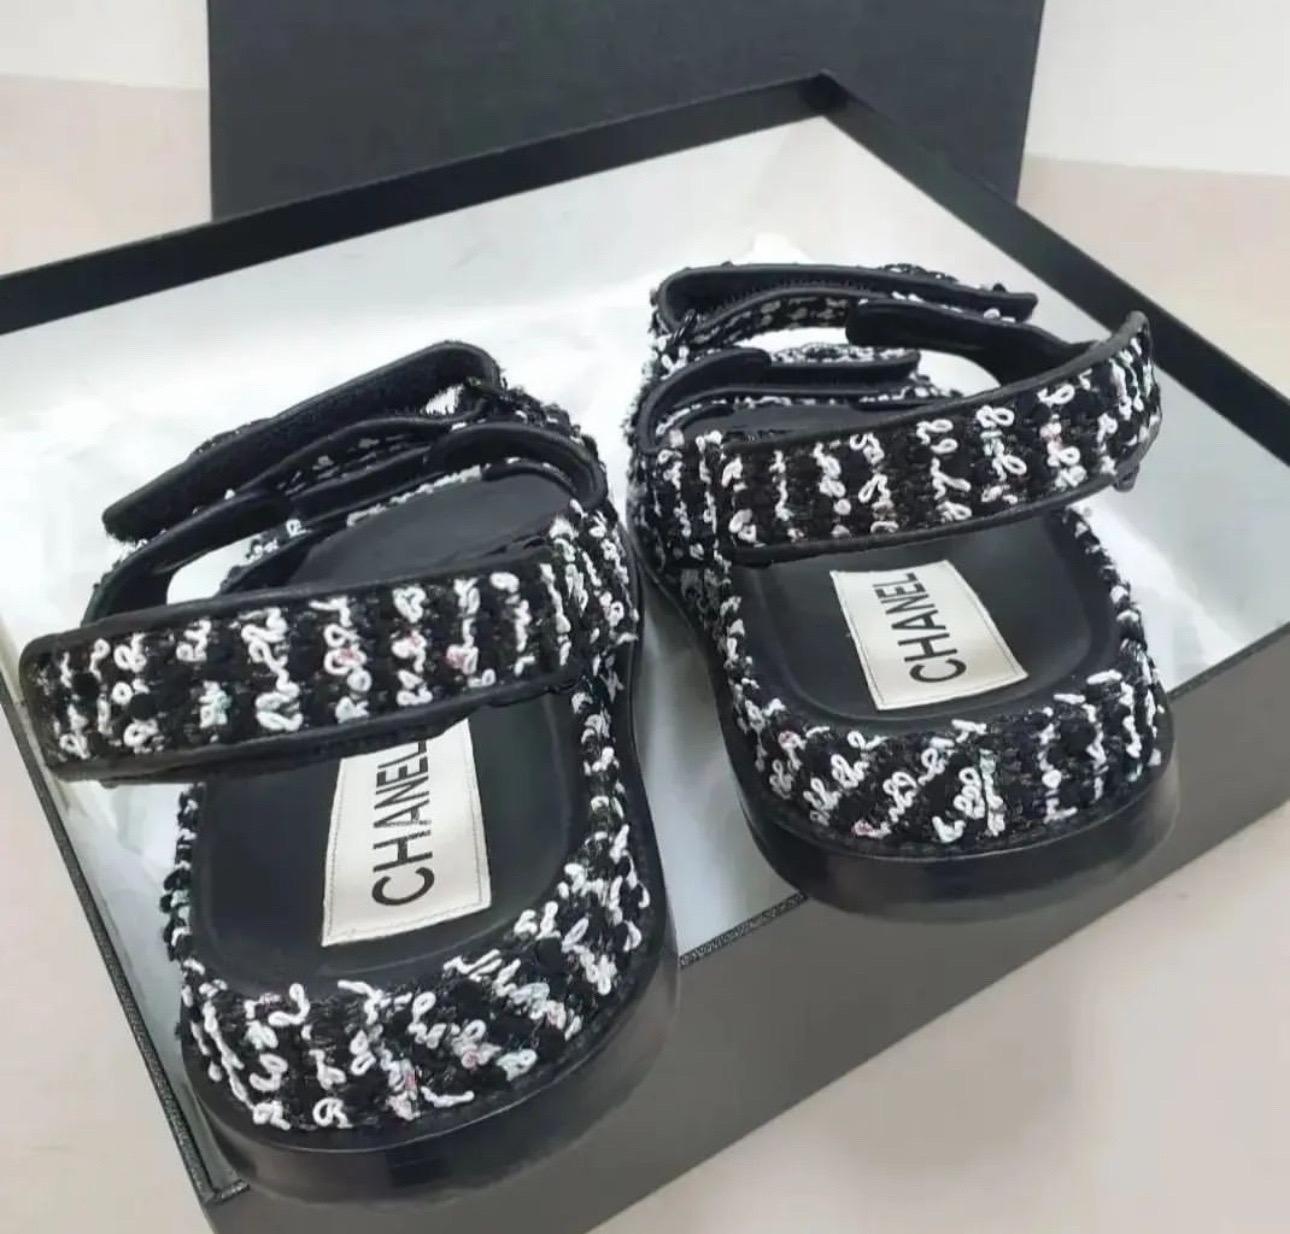 Chanel black & white tweed dad sandals with crystal embellished cc logo 
Sz.38.5
No box. No dust bag